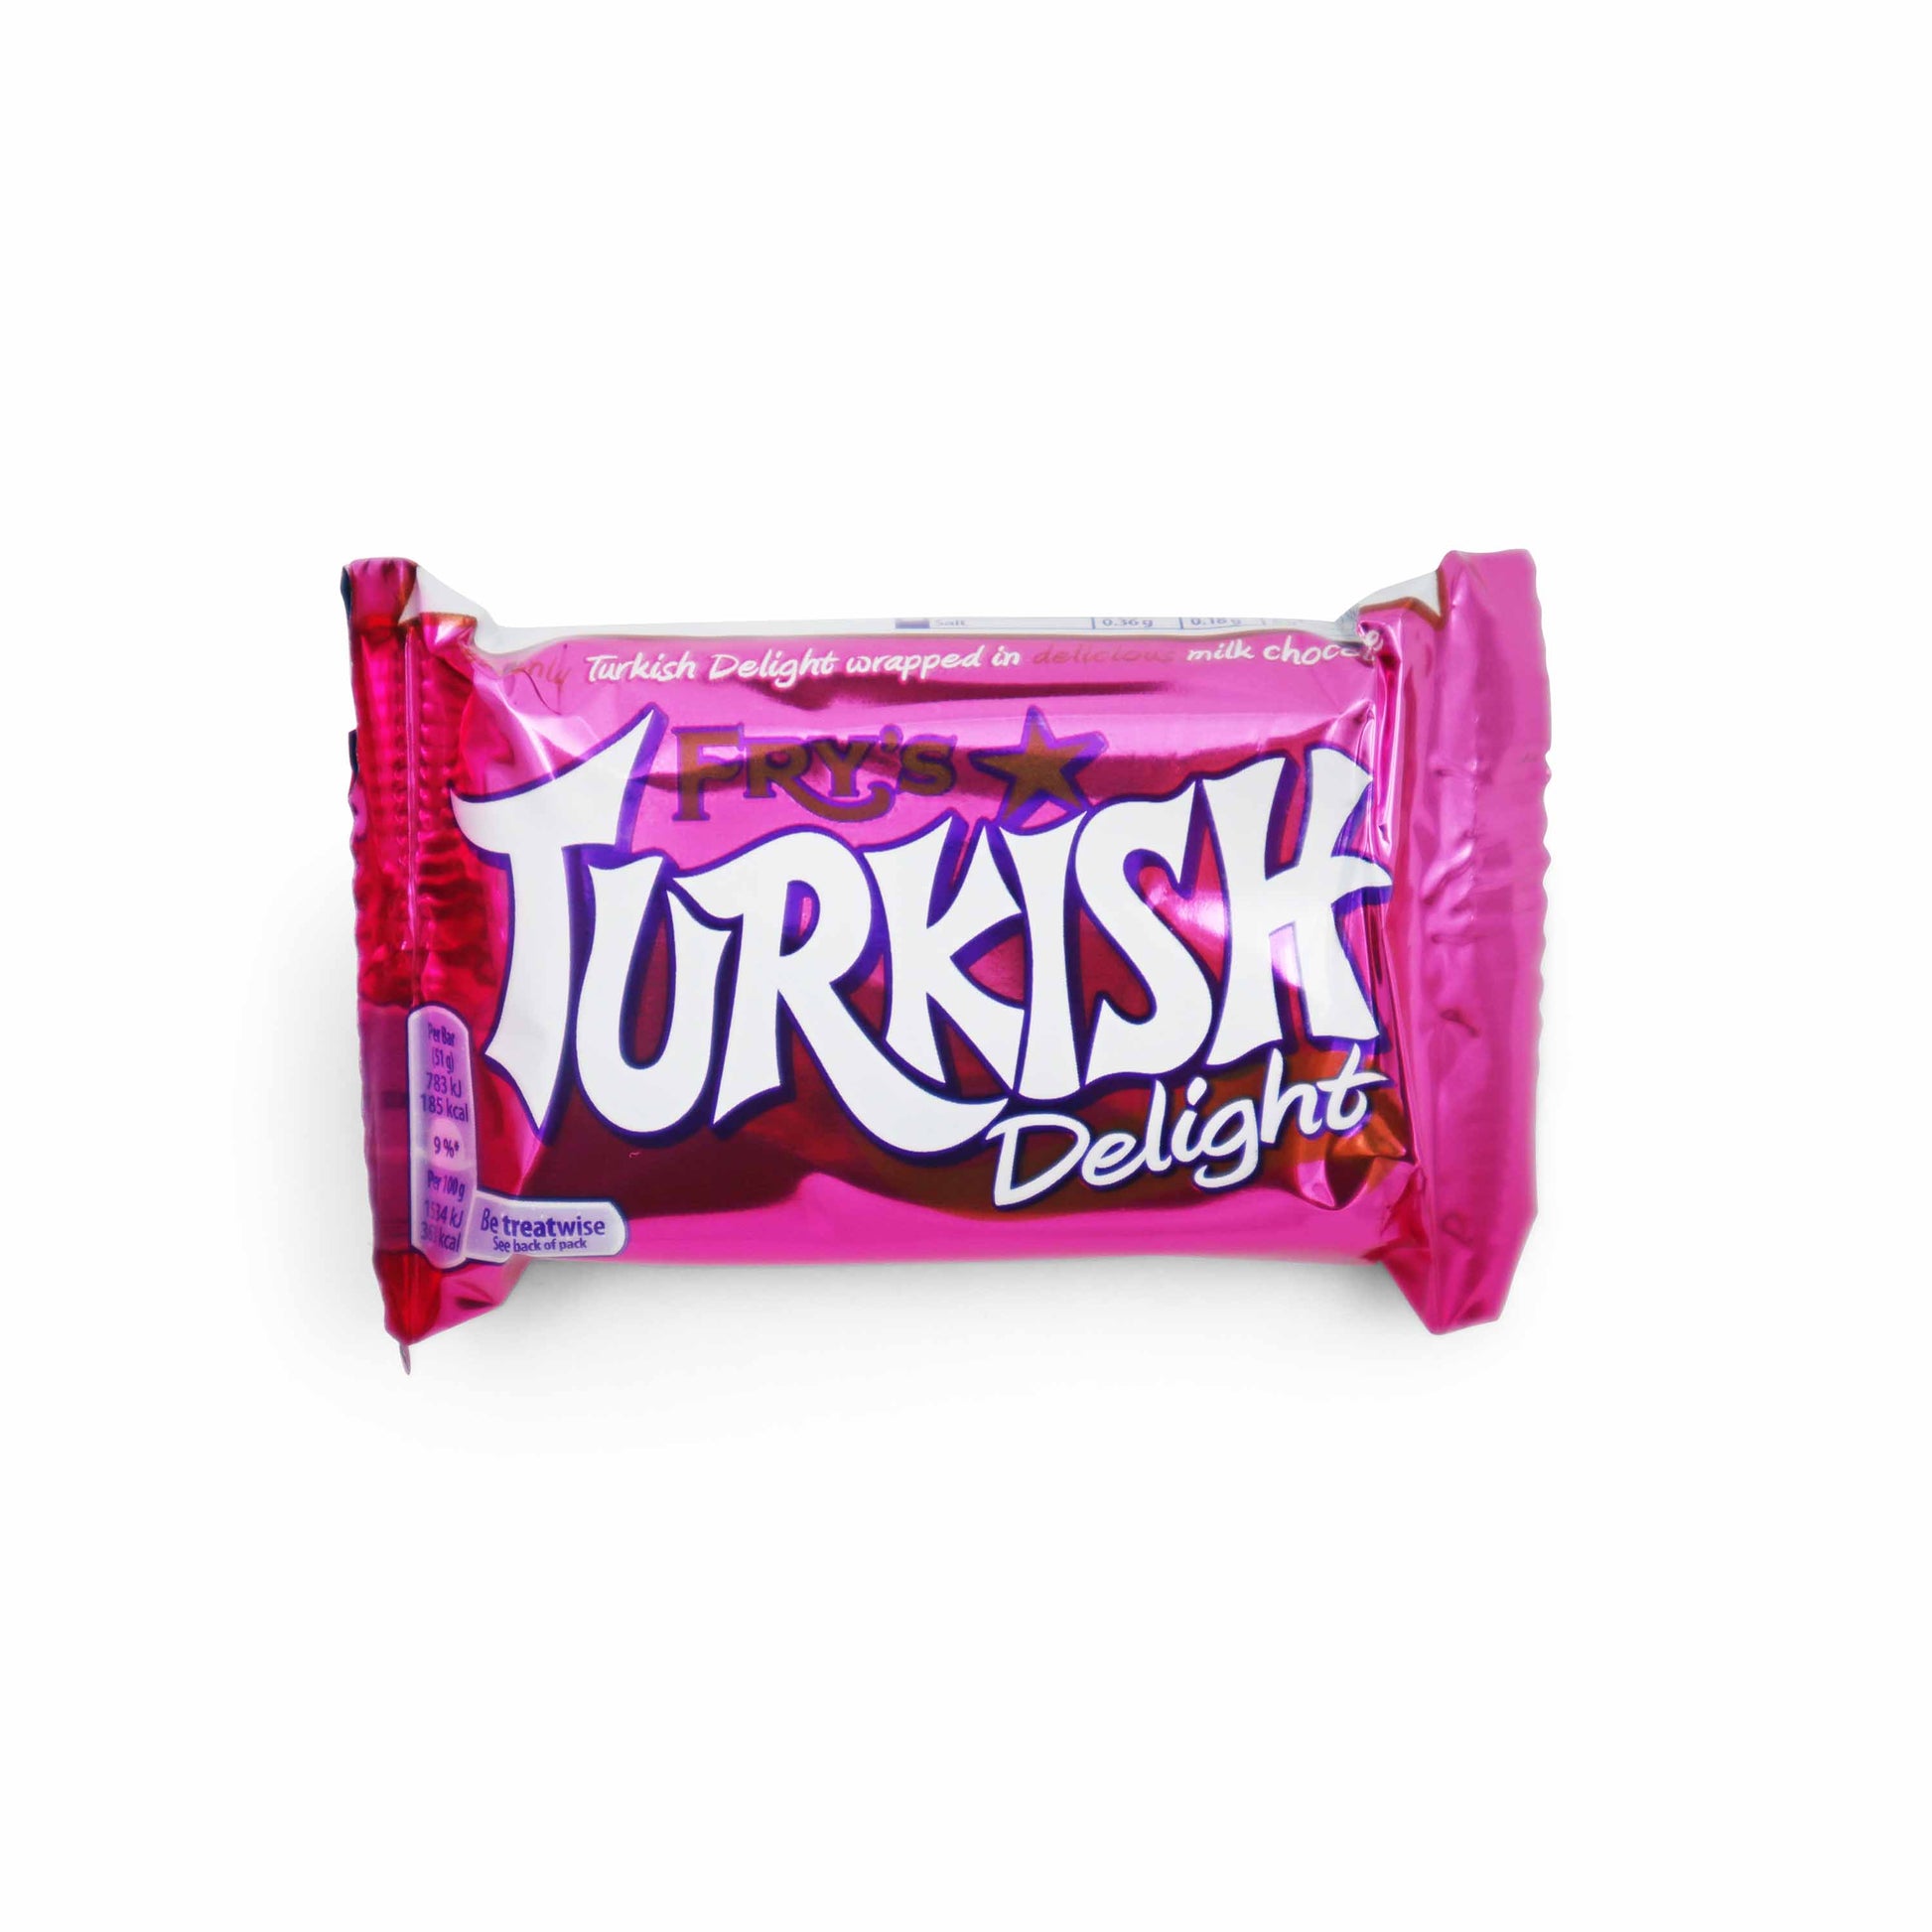 Fry's Turkish Delight Chocolate Bar - 51g - British Snacks